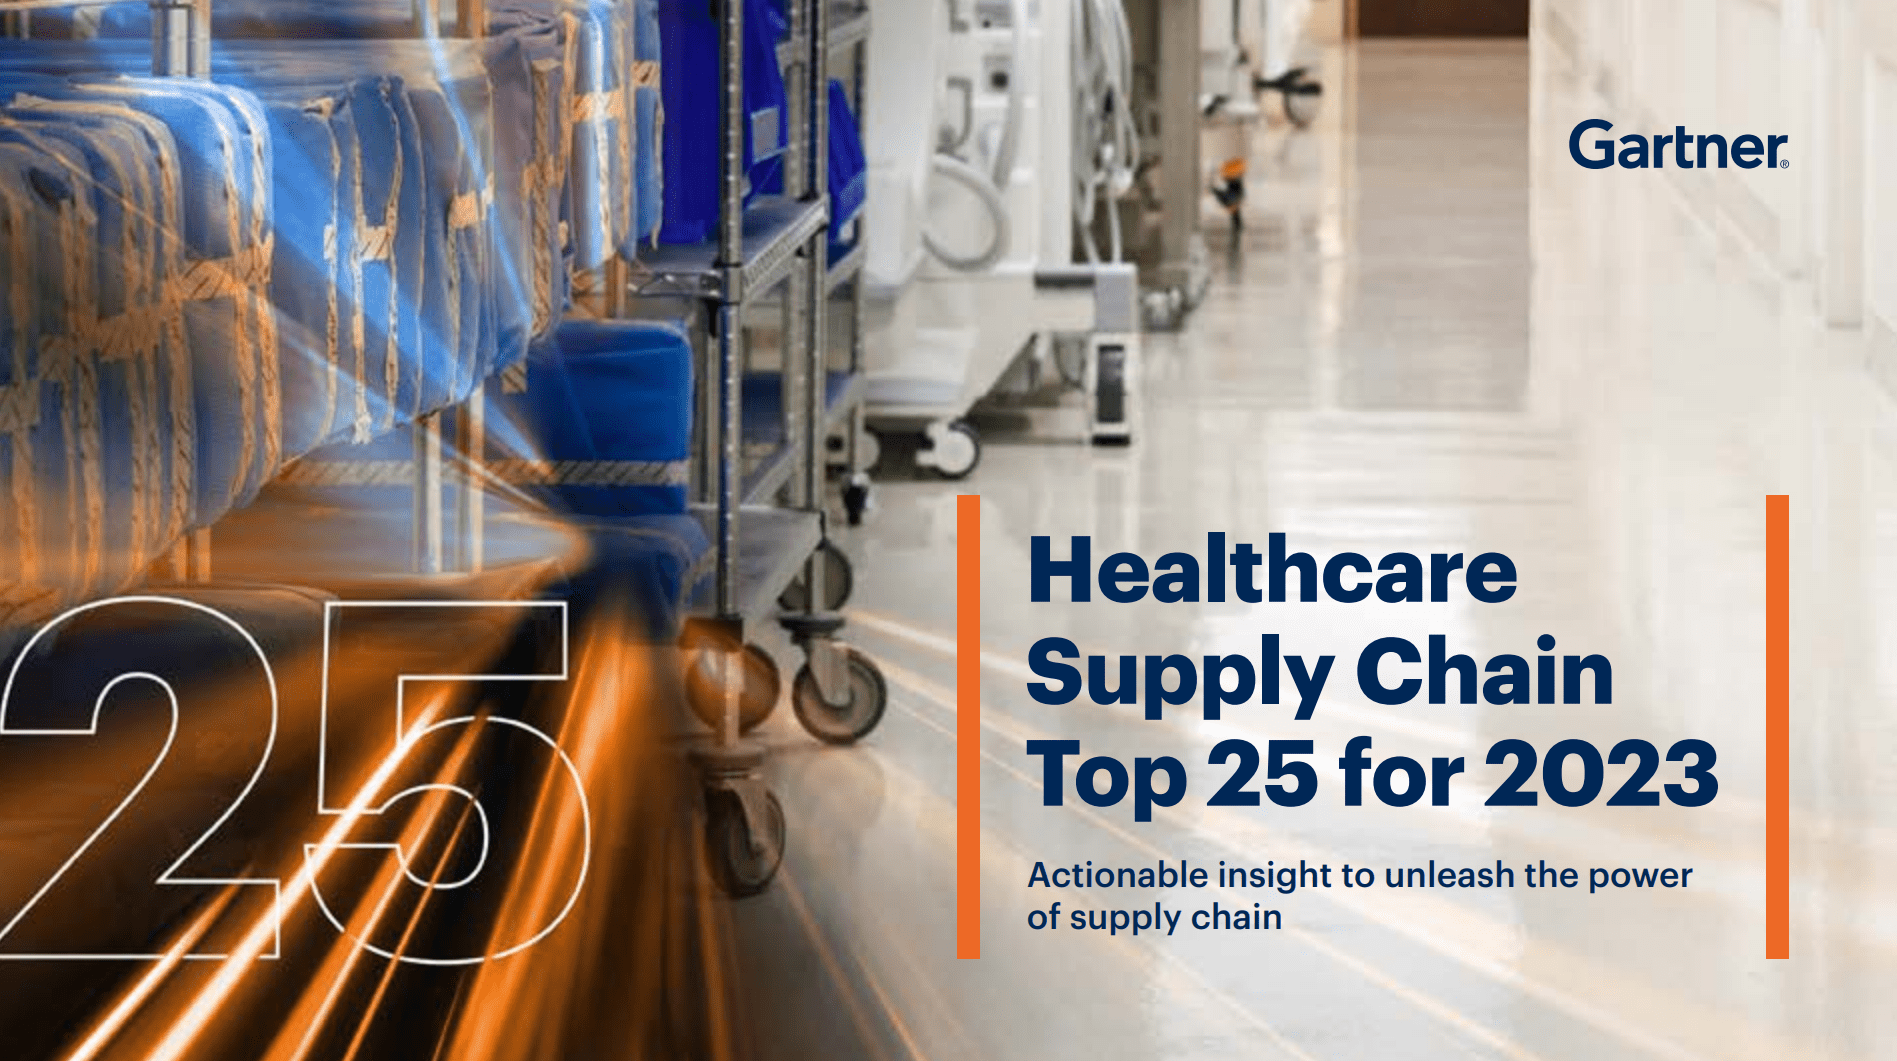 Gartner Releases Healthcare Supply Chain Top 25 for 2023